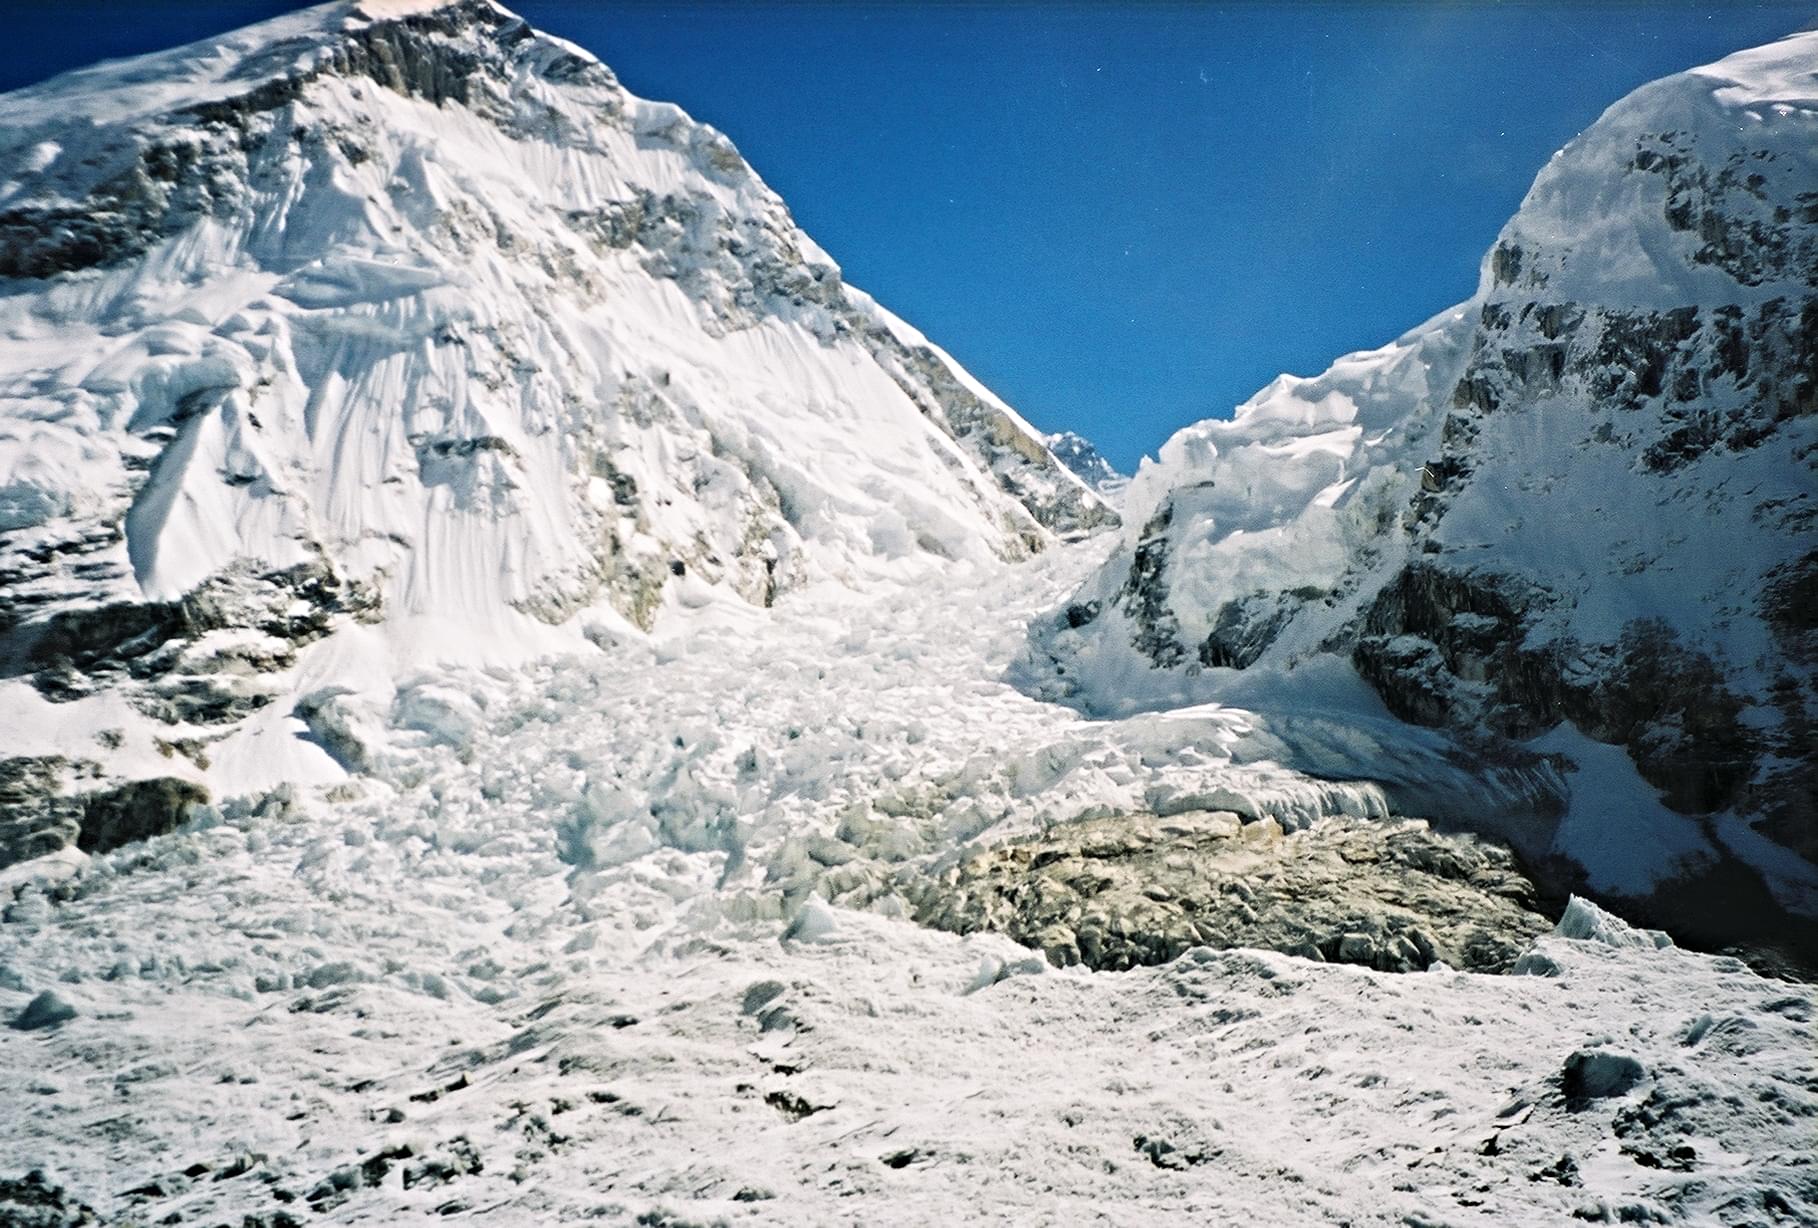 Khumbu Glacier Overview